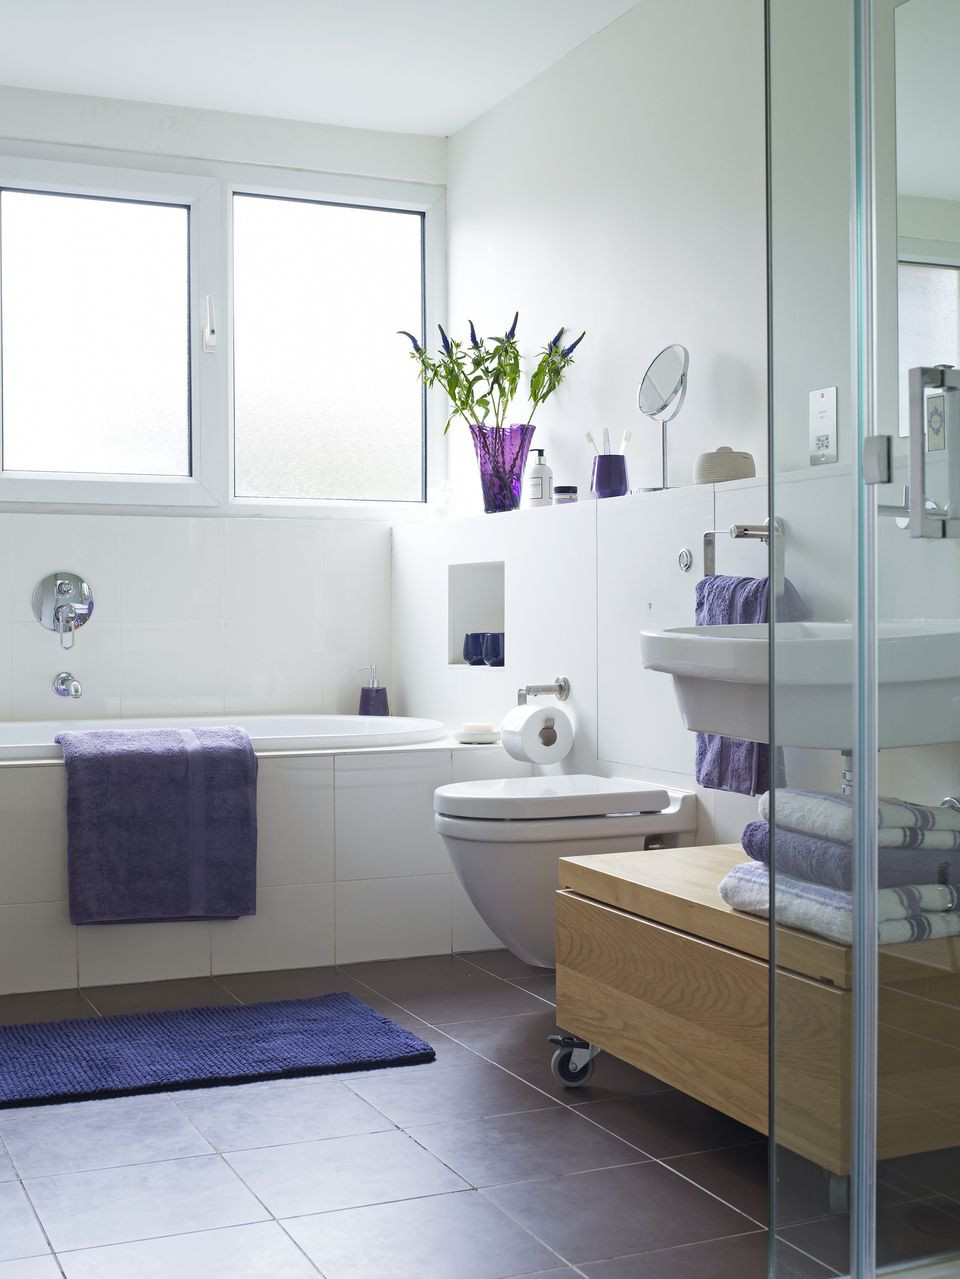 Images Of Small Bathroom
 25 Killer Small Bathroom Design Tips